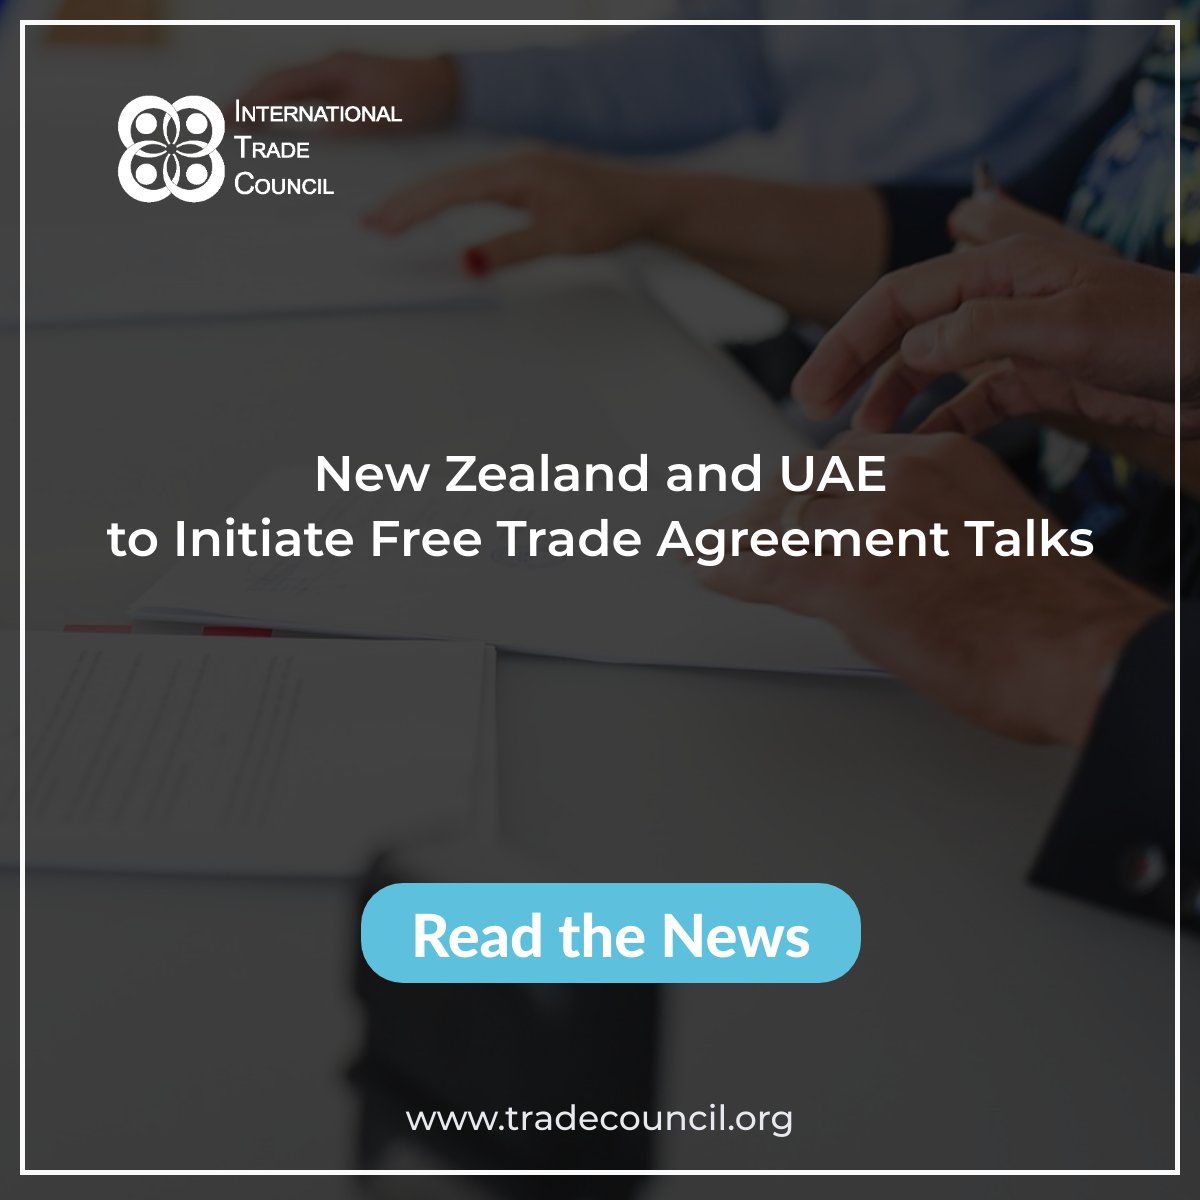 New Zealand and UAE to Initiate Free Trade Agreement Talks
Read The News: tradecouncil.org/new-zealand-an…
#ITCNewsUpdates #BreakingNews #TradeTalks #EconomicPartnership #GlobalTrade #NewsUpdate